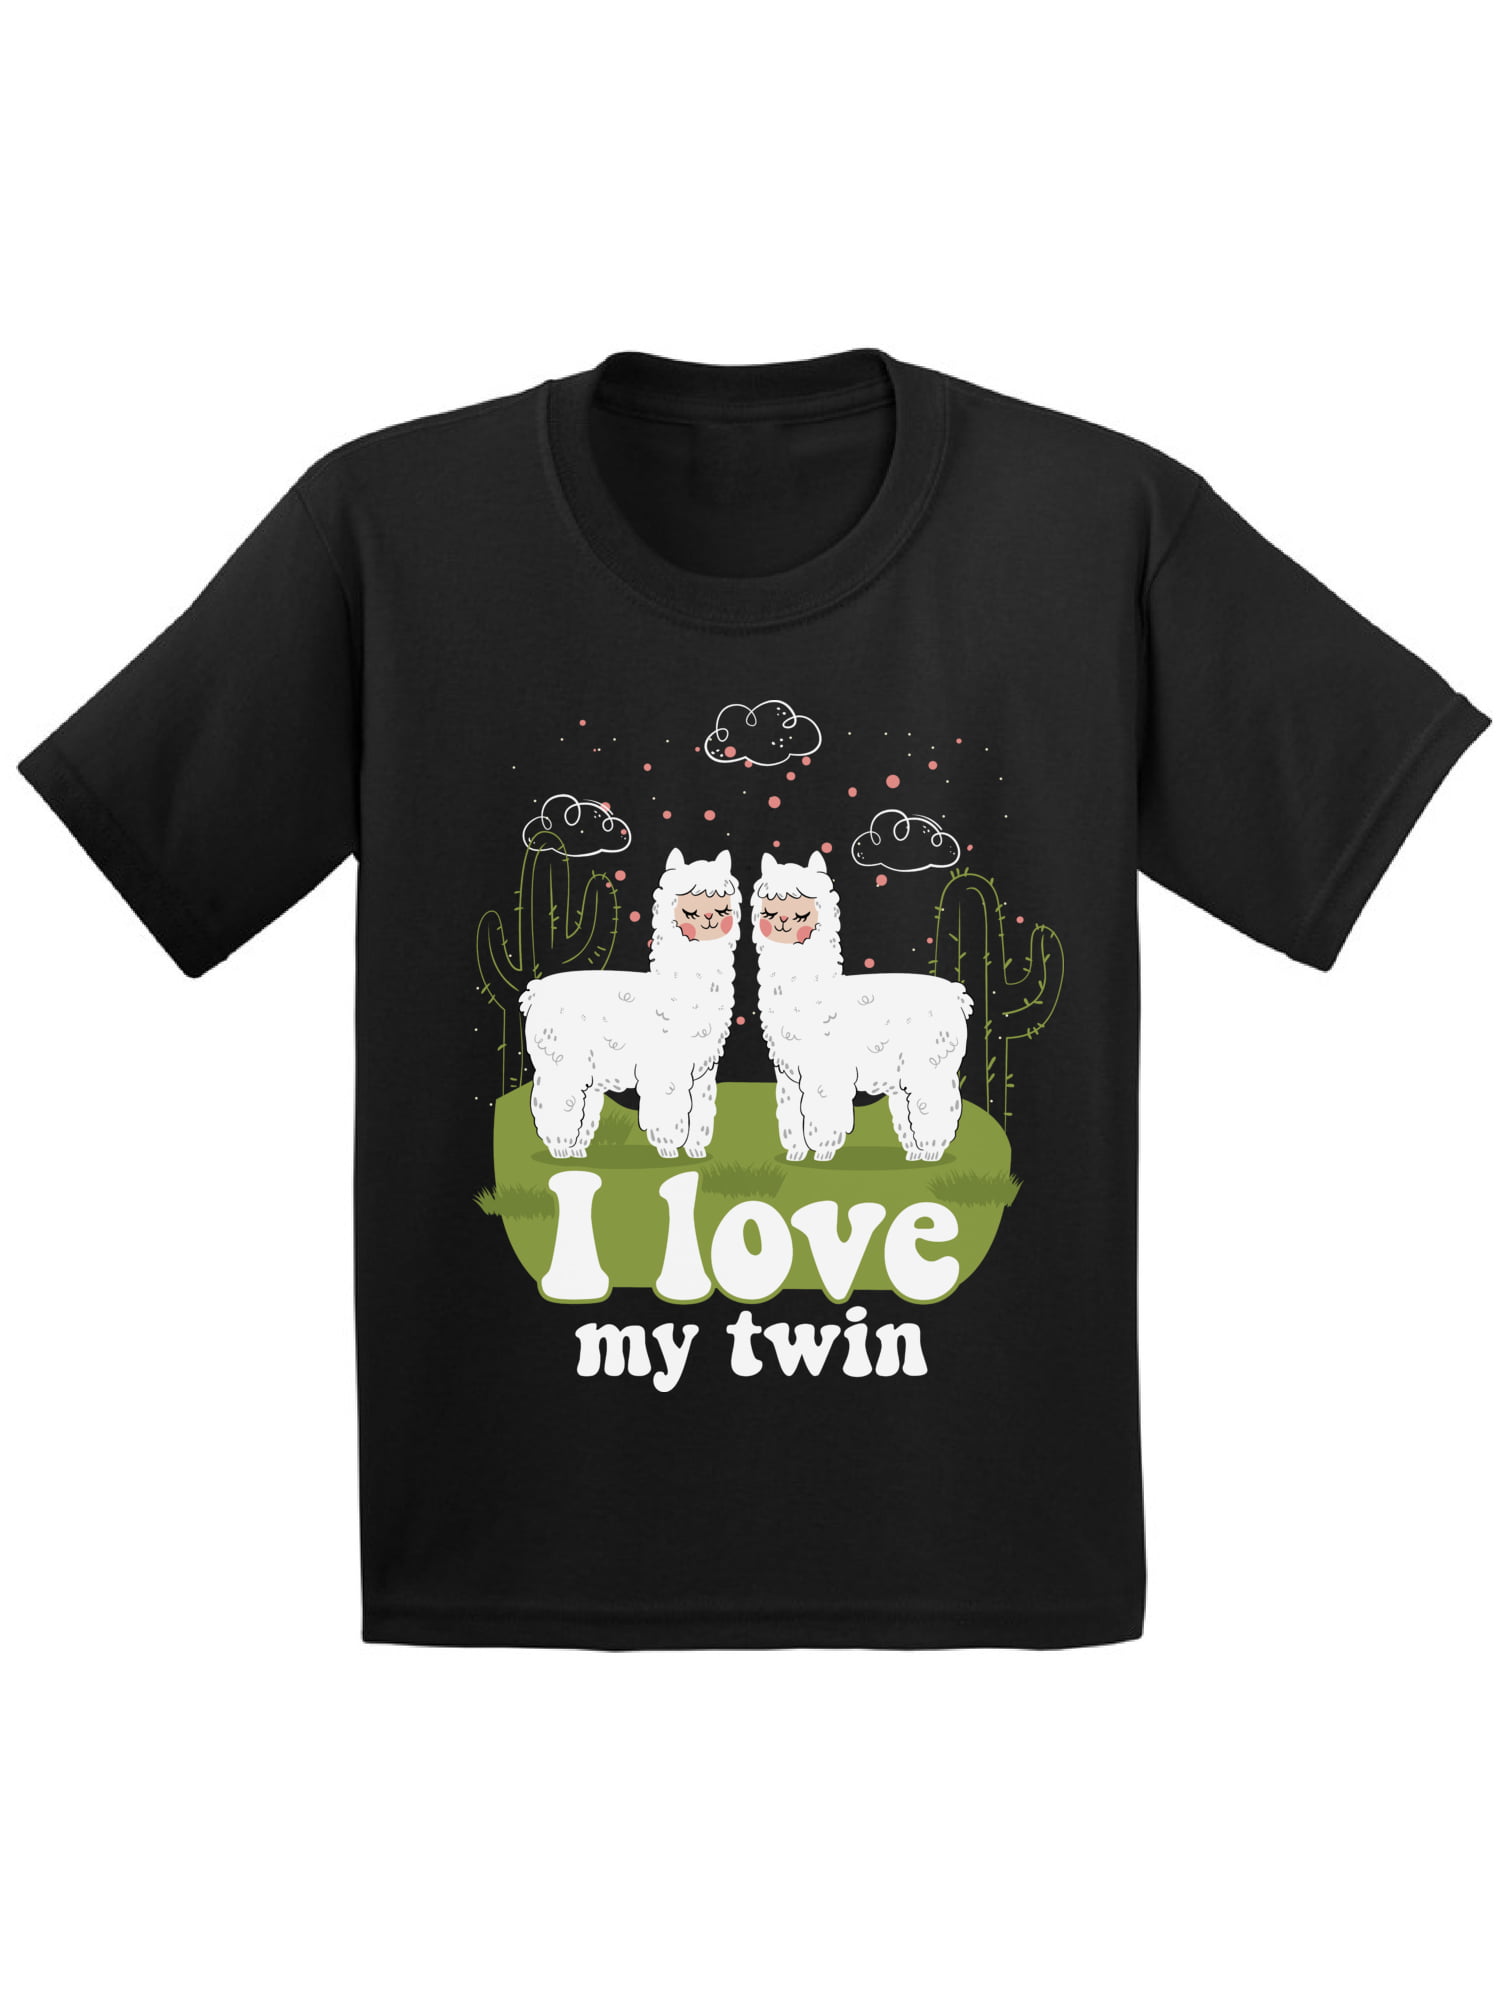 boy girl twin birthday shirts